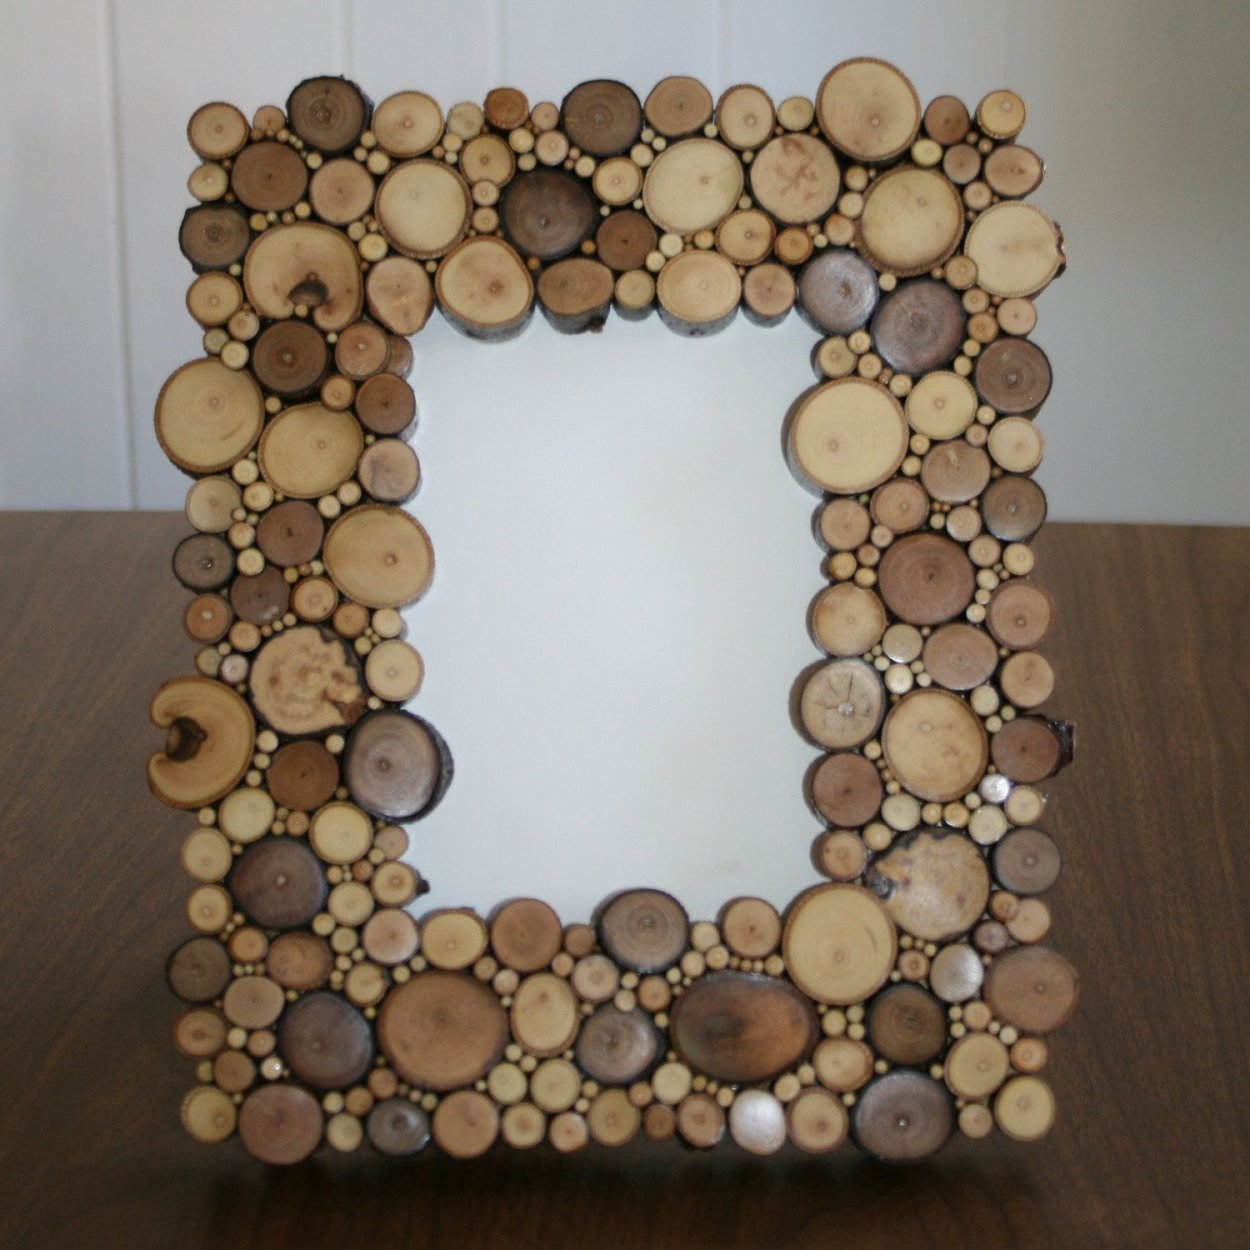 Рамка для зеркала из дерева